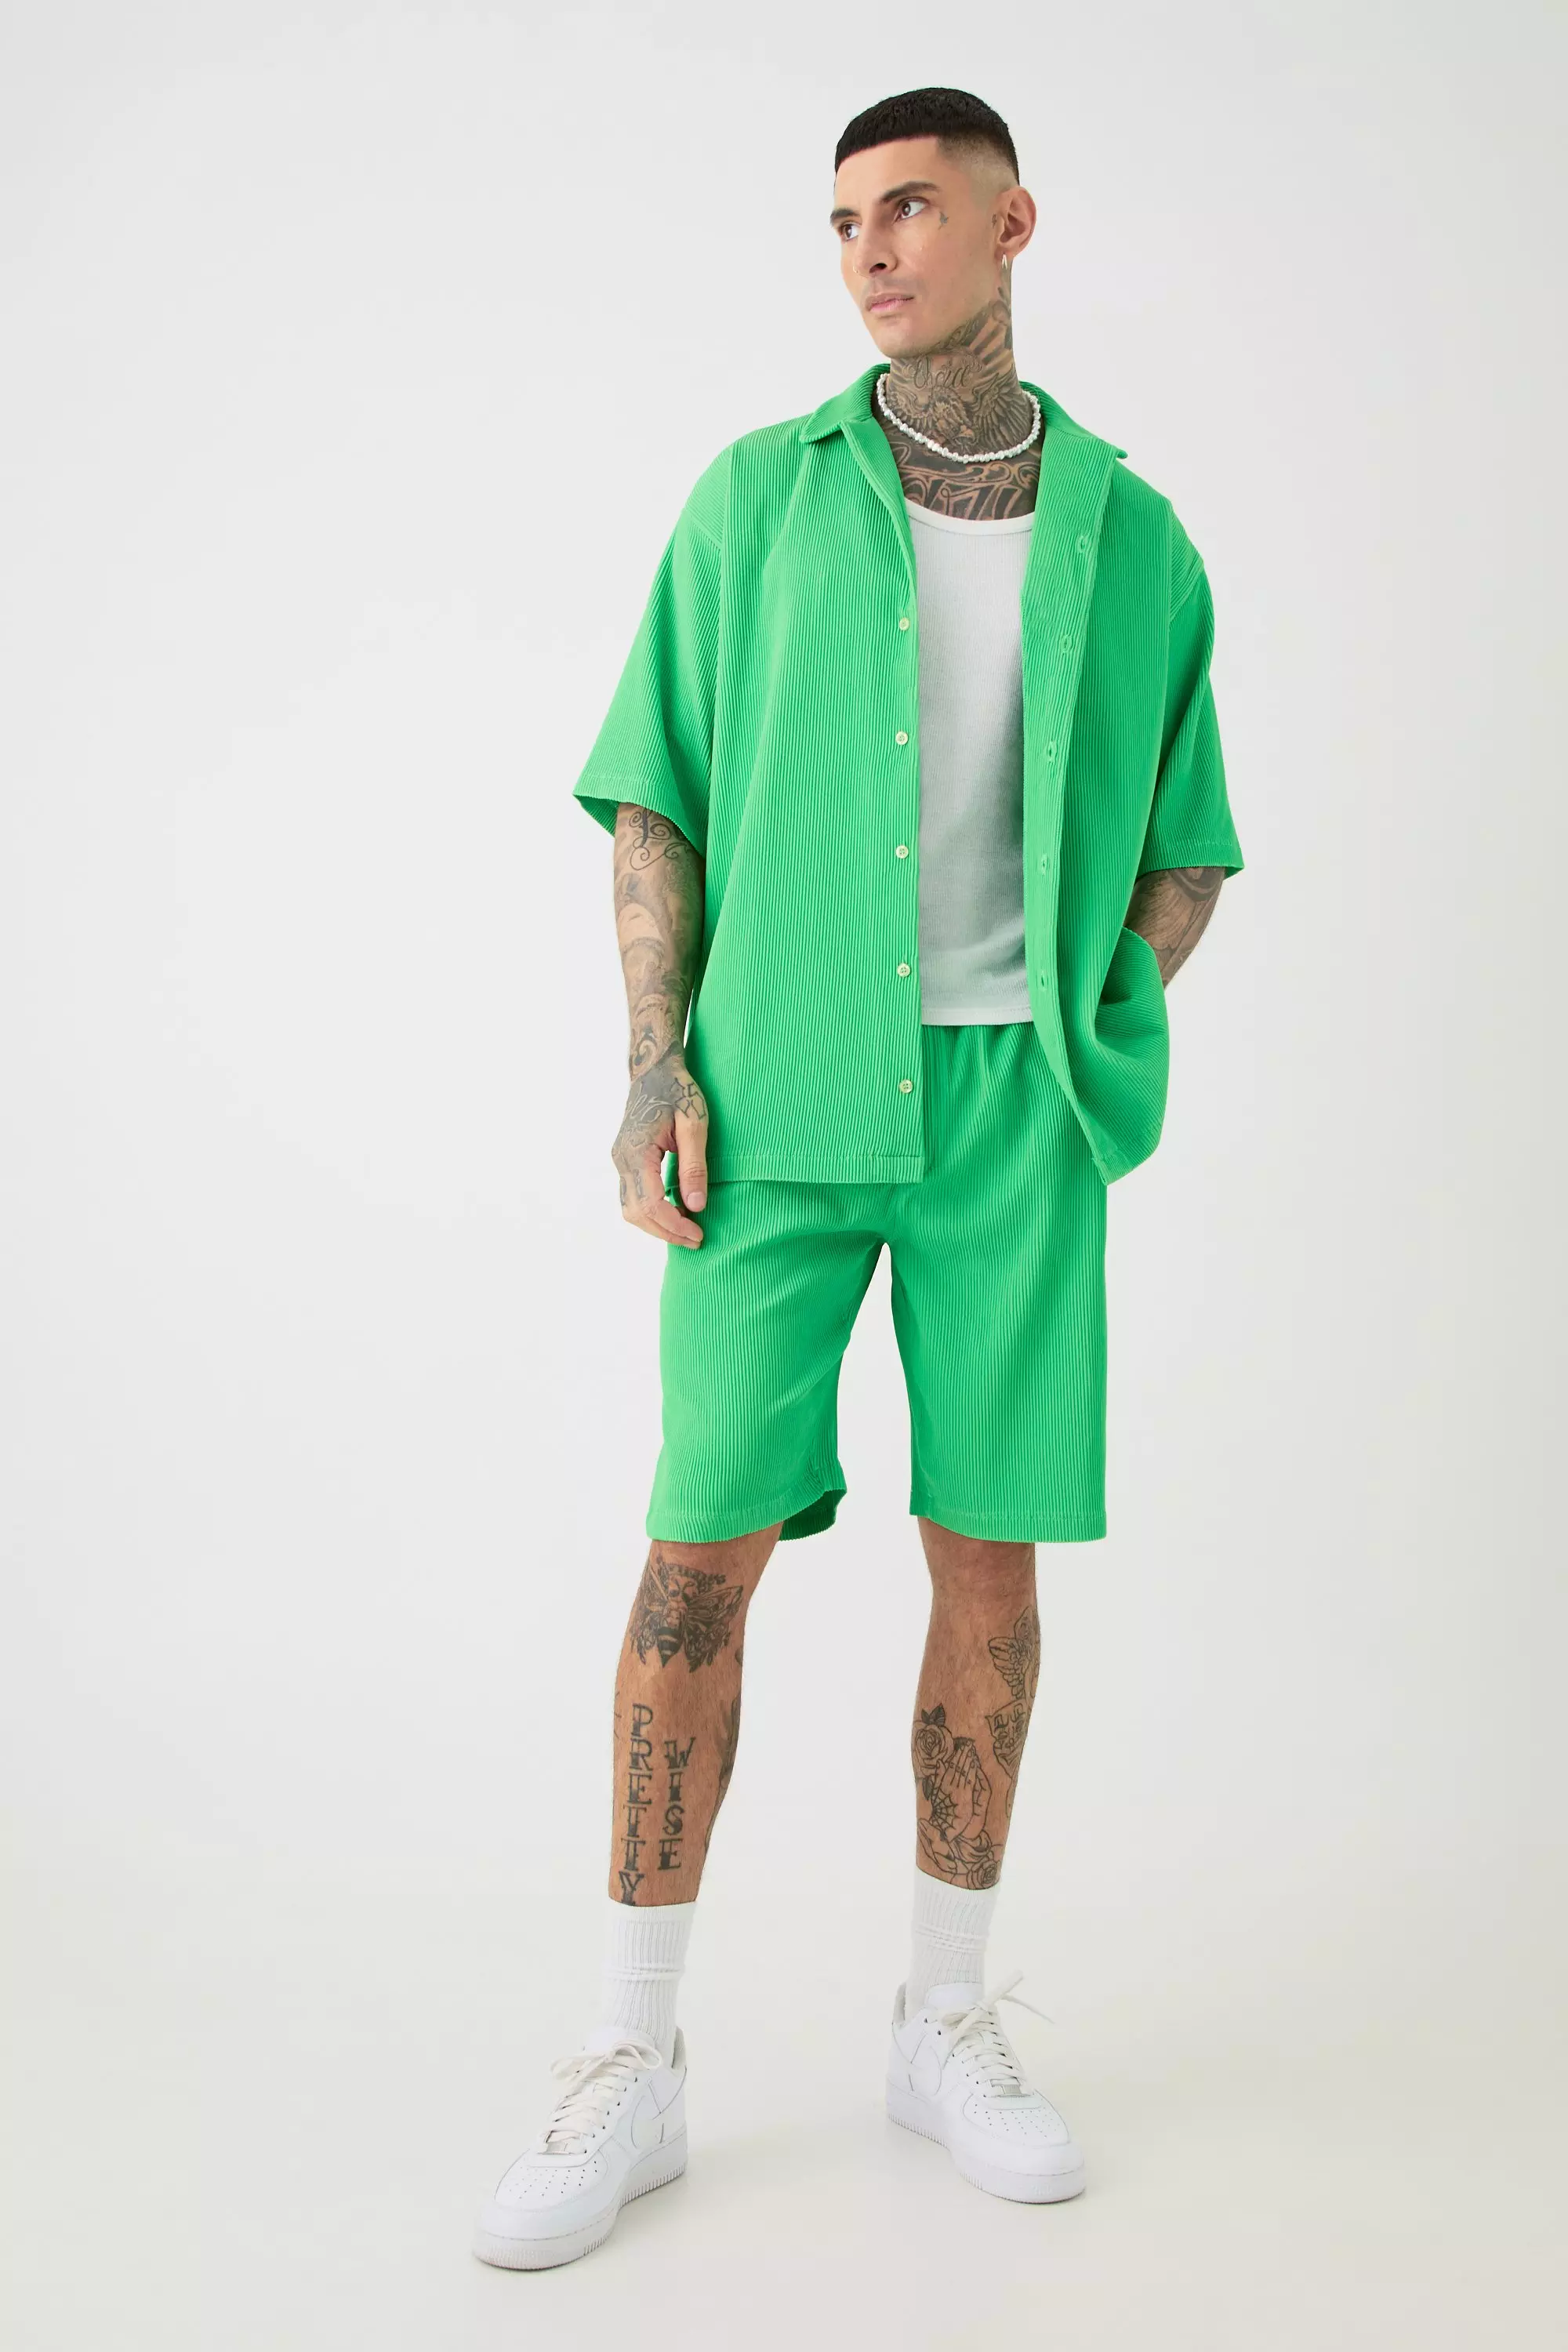 Green Tall Oversized Short Sleeve Pleated Shirt & Short In Green